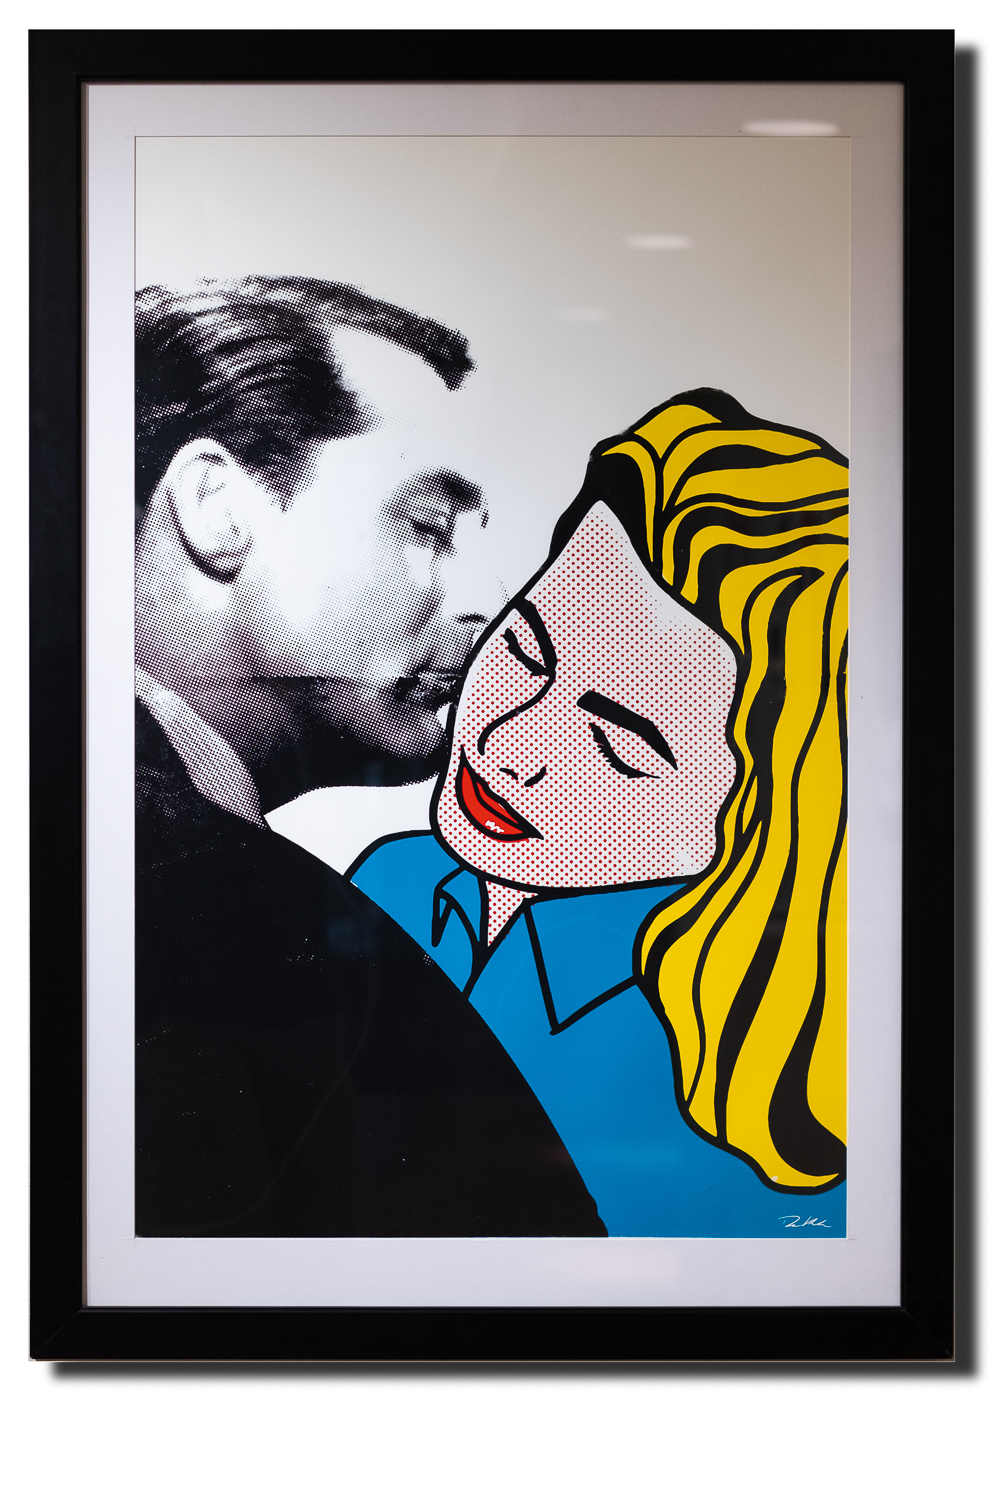 RealLiveGirl with man kissing pop art woman by Diego Huerta